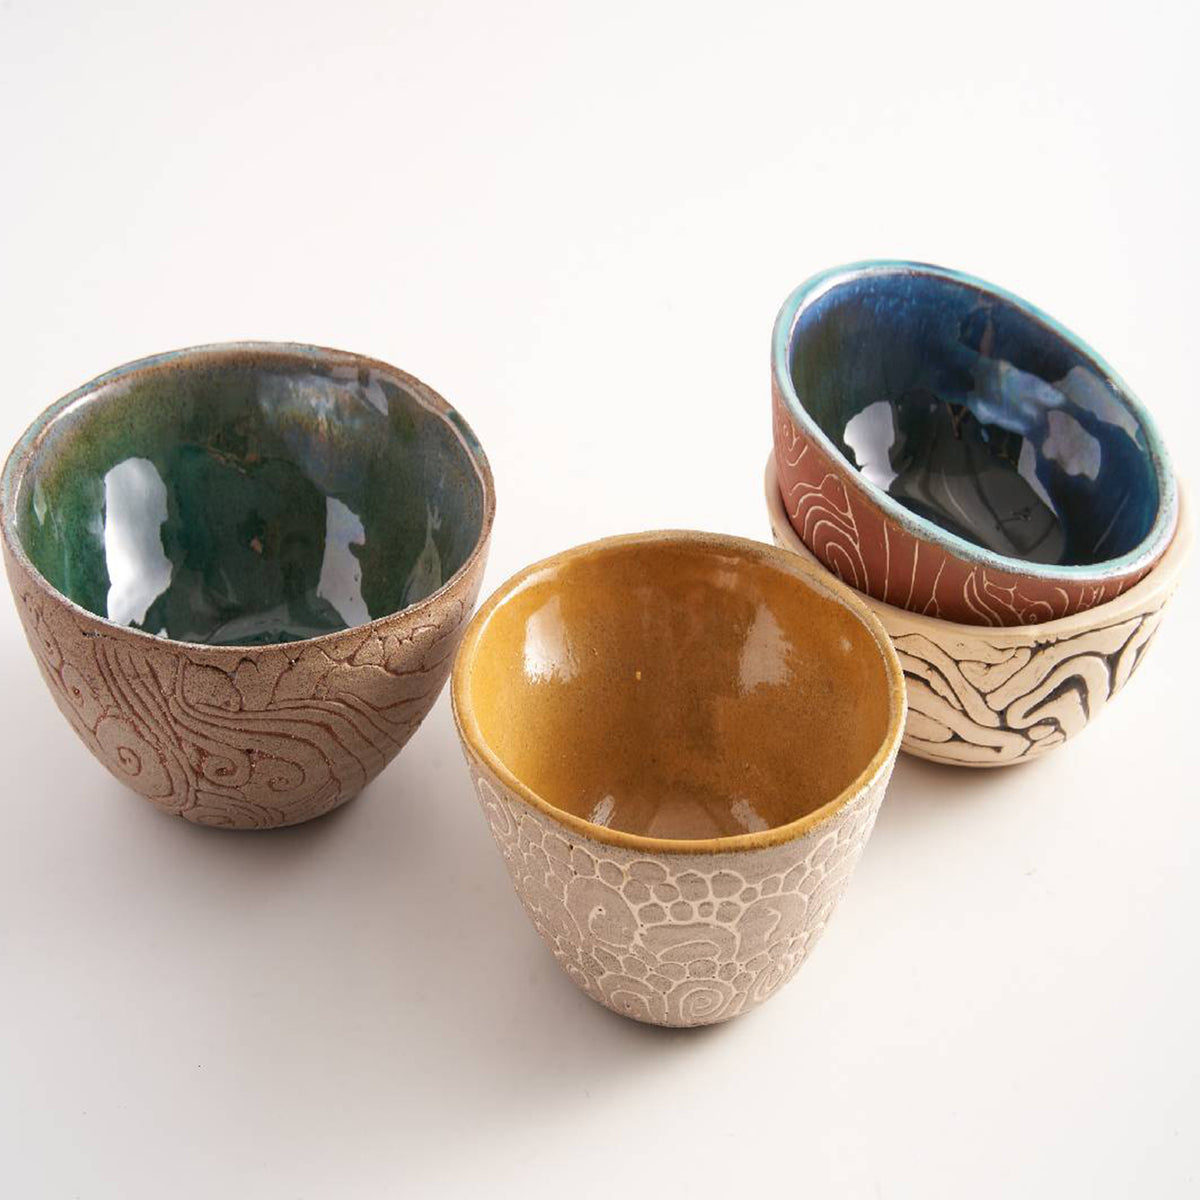 Japanese Ceramic Bowls Handles, Japanese Mixing Bowl